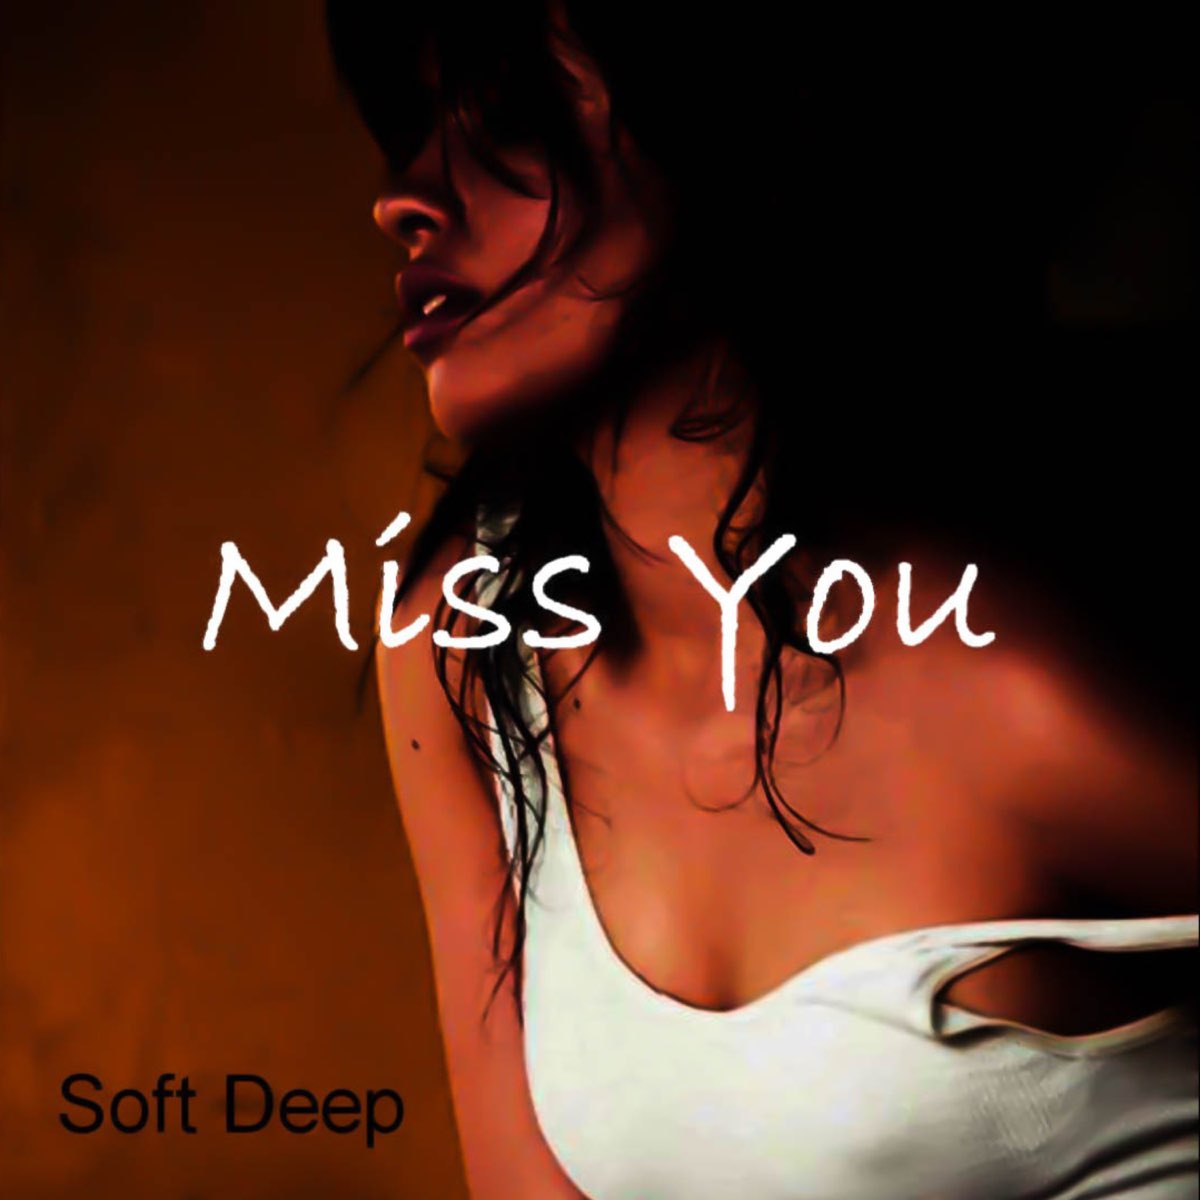 Voices deep samelo. Soft Deep. Miss you песня обложка. Soft Deep Maleena. Soft Deep Alive.